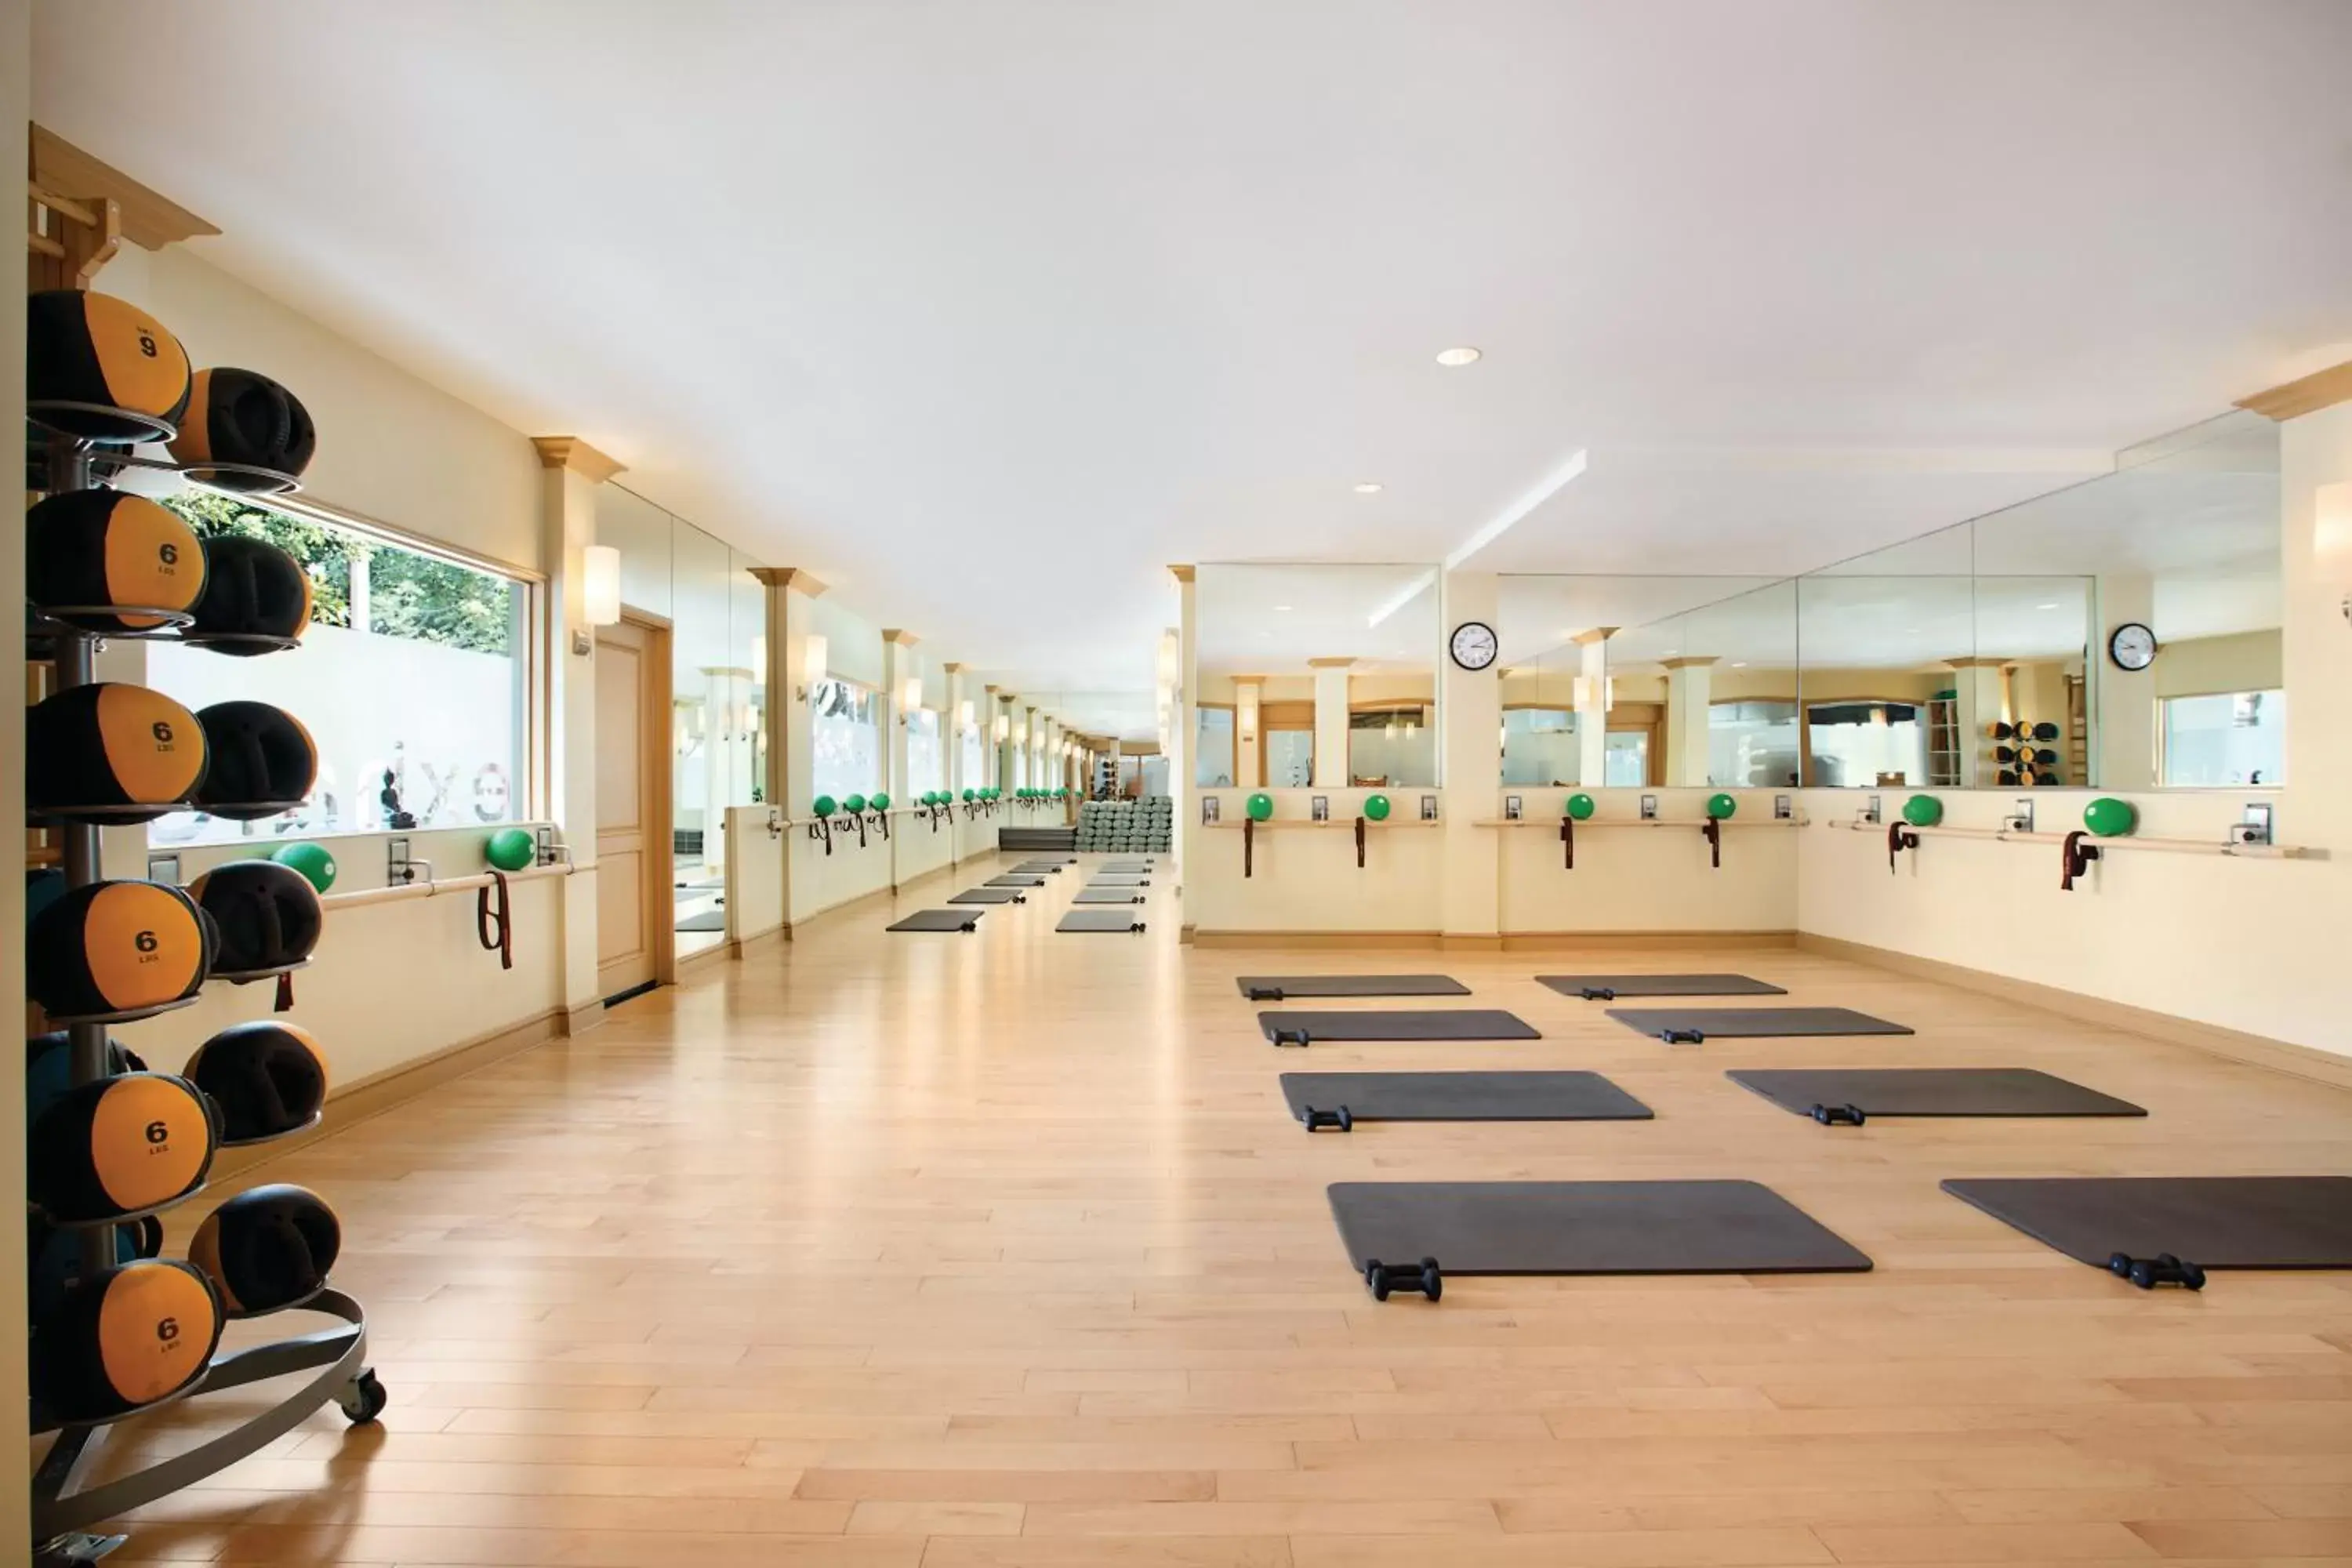 Fitness centre/facilities, Fitness Center/Facilities in Fairmont Miramar Hotel & Bungalows